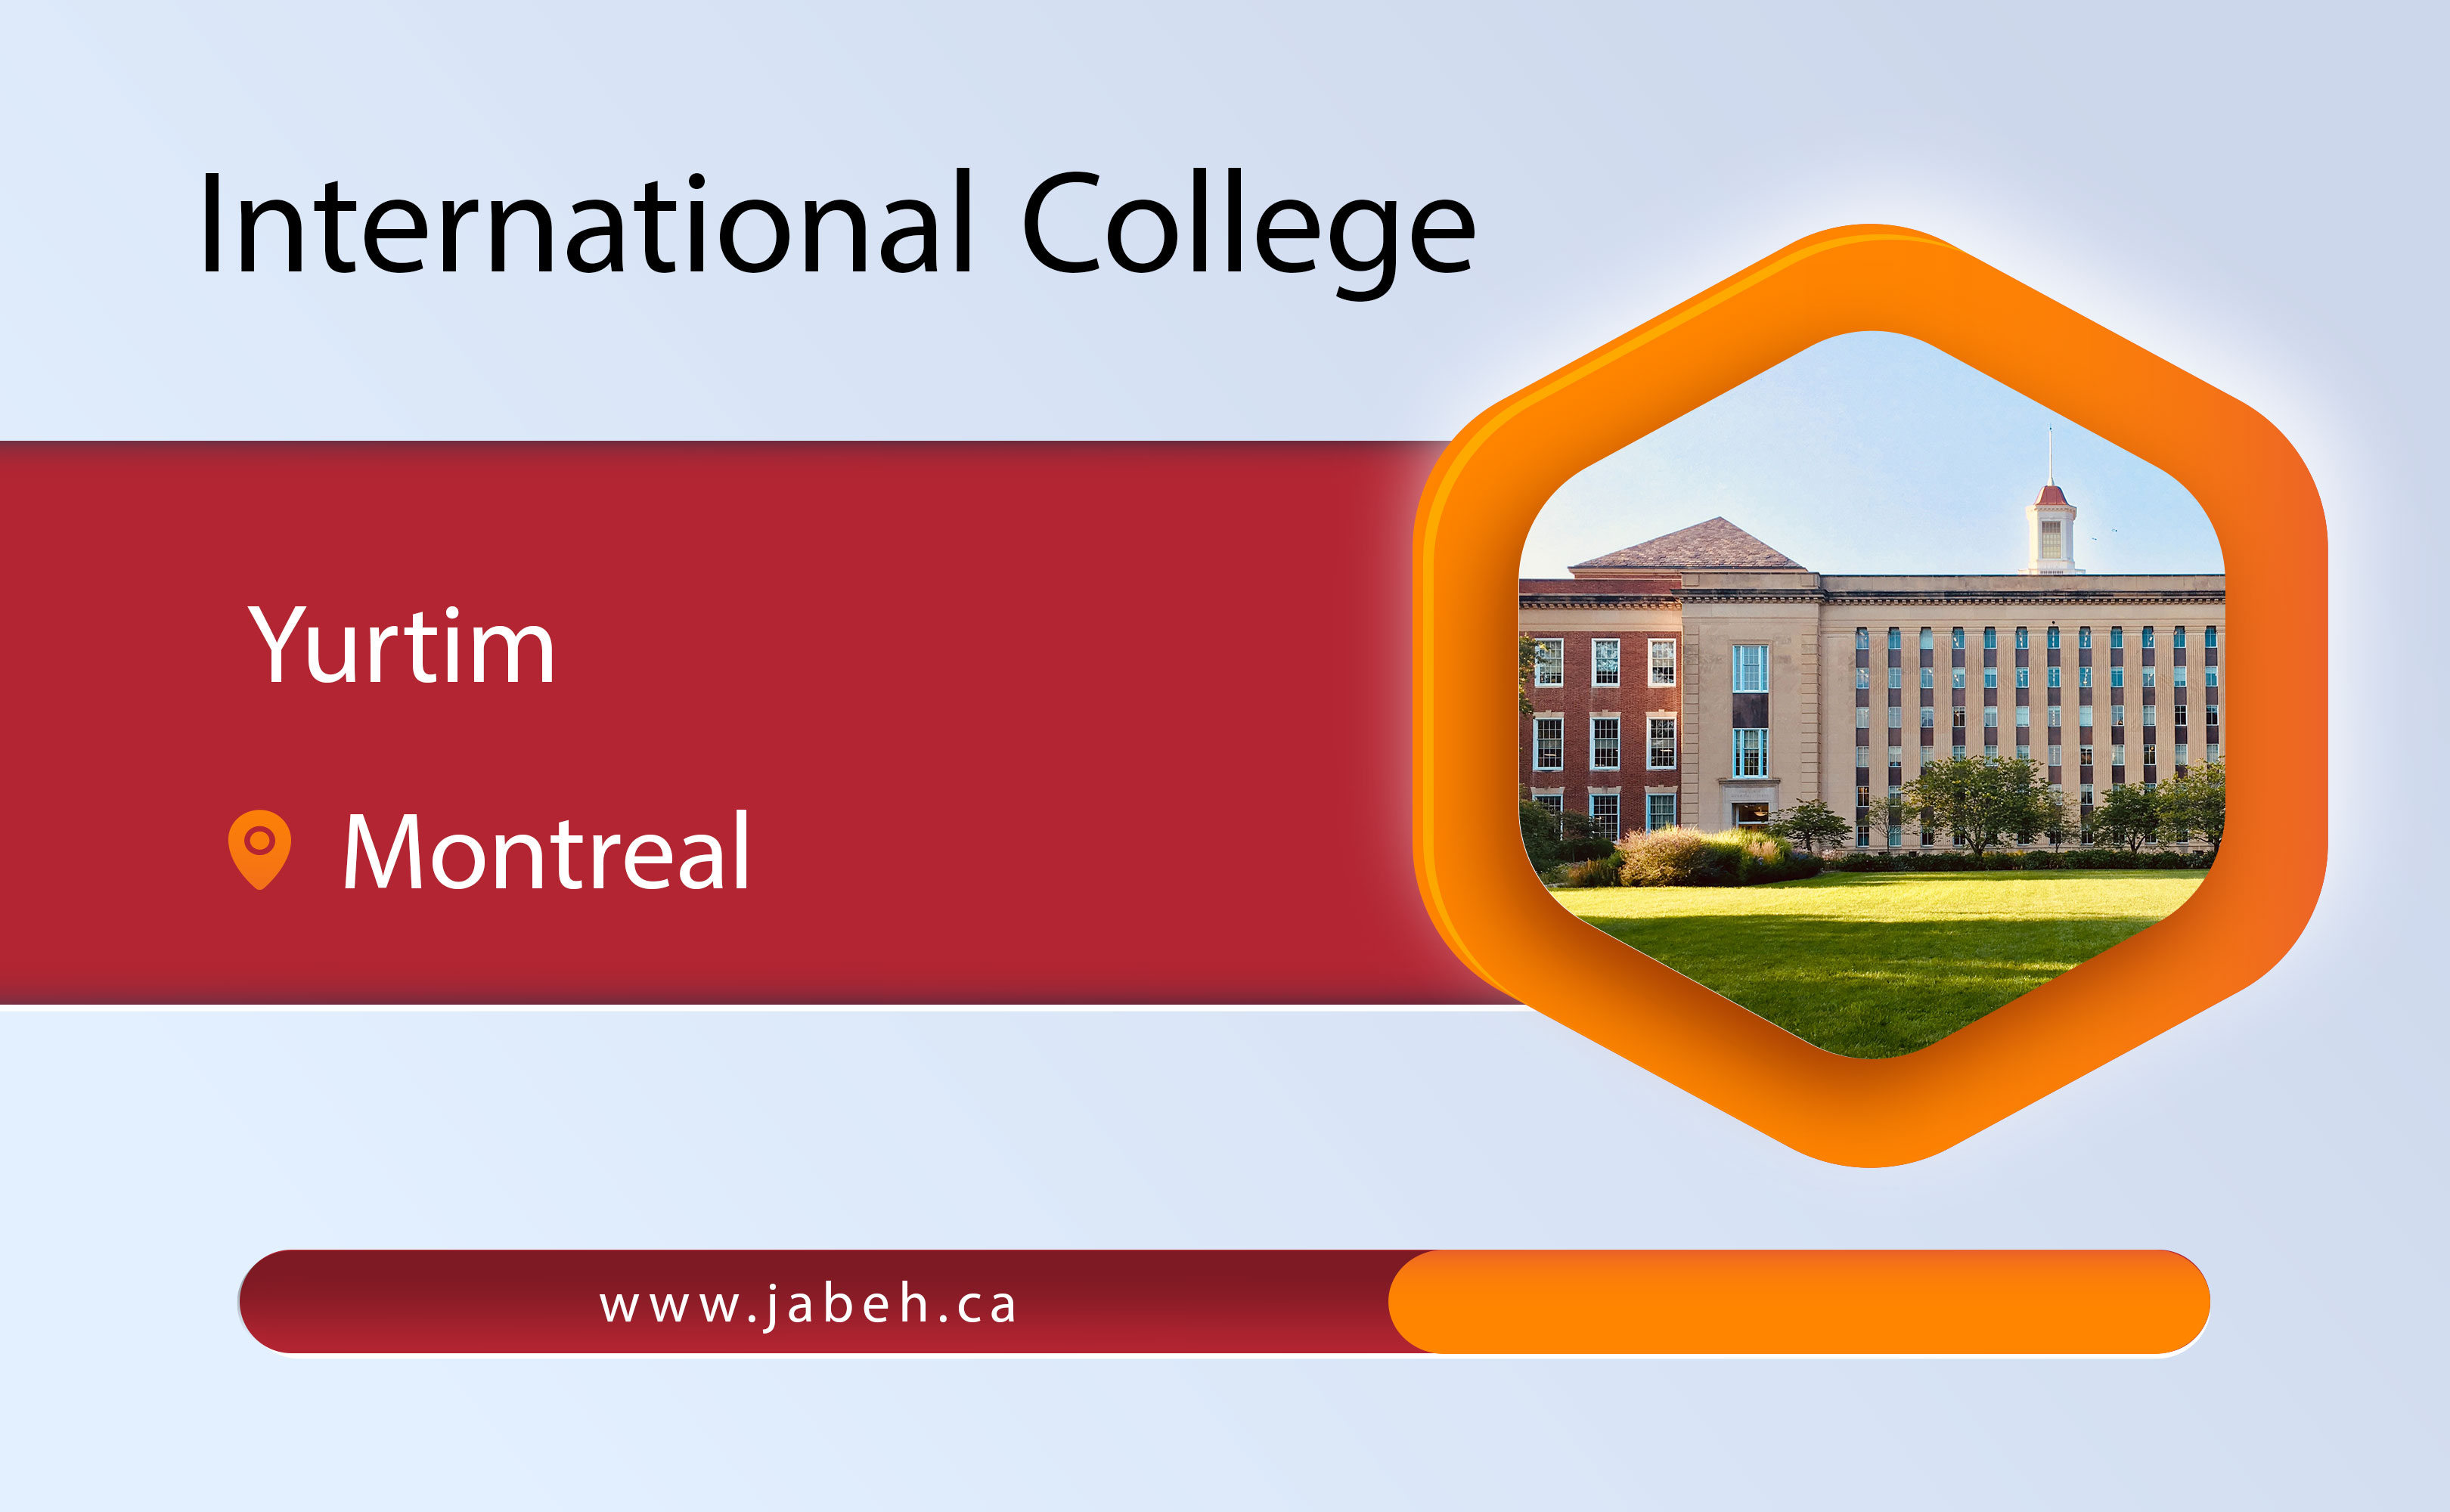 Yurtim International College in Montreal